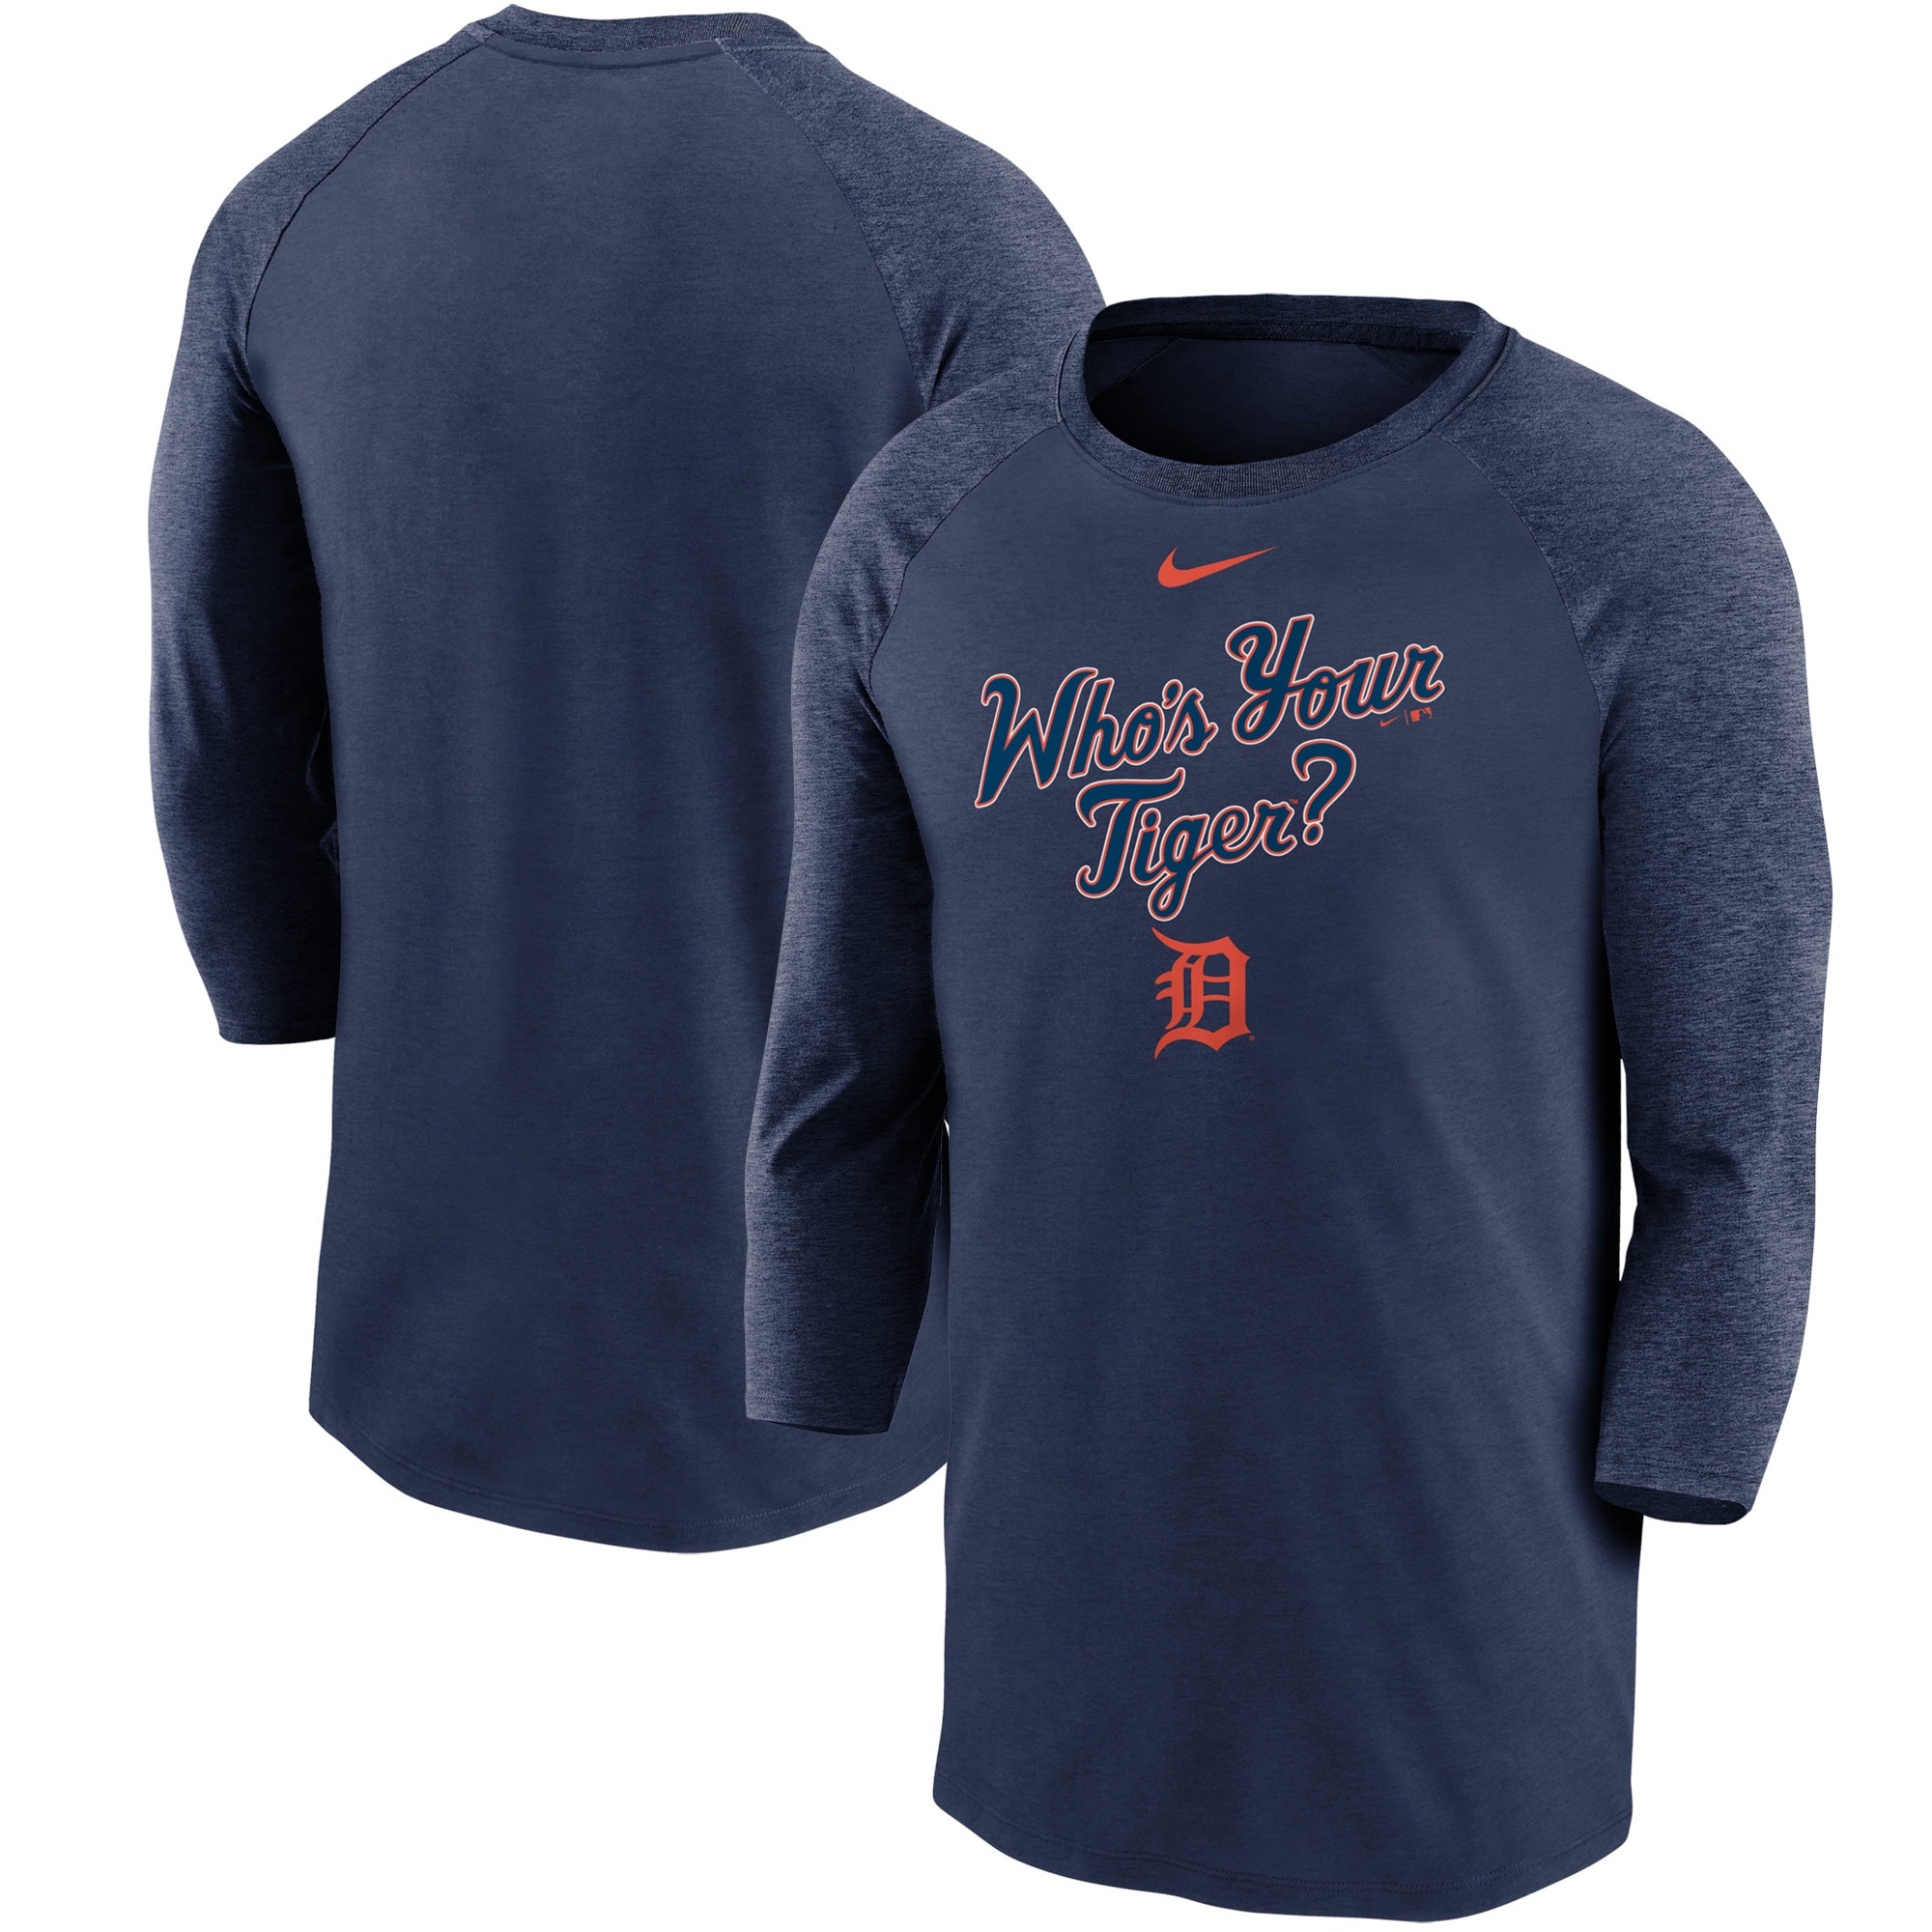 Men's Nike Navy Detroit Tigers Local Phrase Tri-Blend 3/4-Sleeve Raglan T-Shirt - image 1 of 3